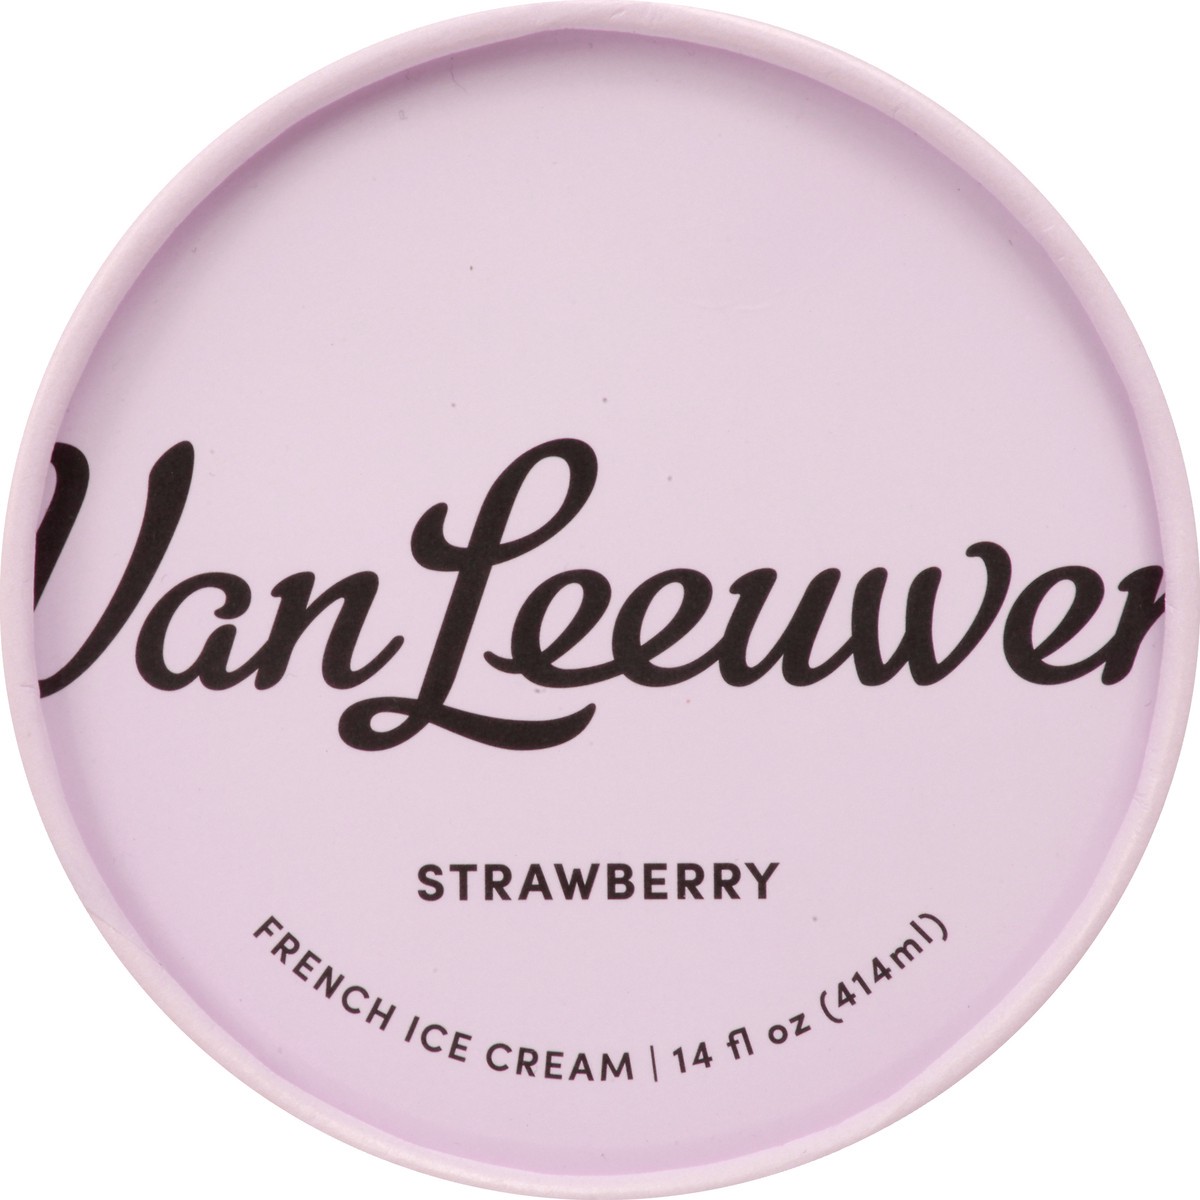 slide 13 of 13, Van Leeuwen Strawberry French Ice Cream 14 oz, 14 oz